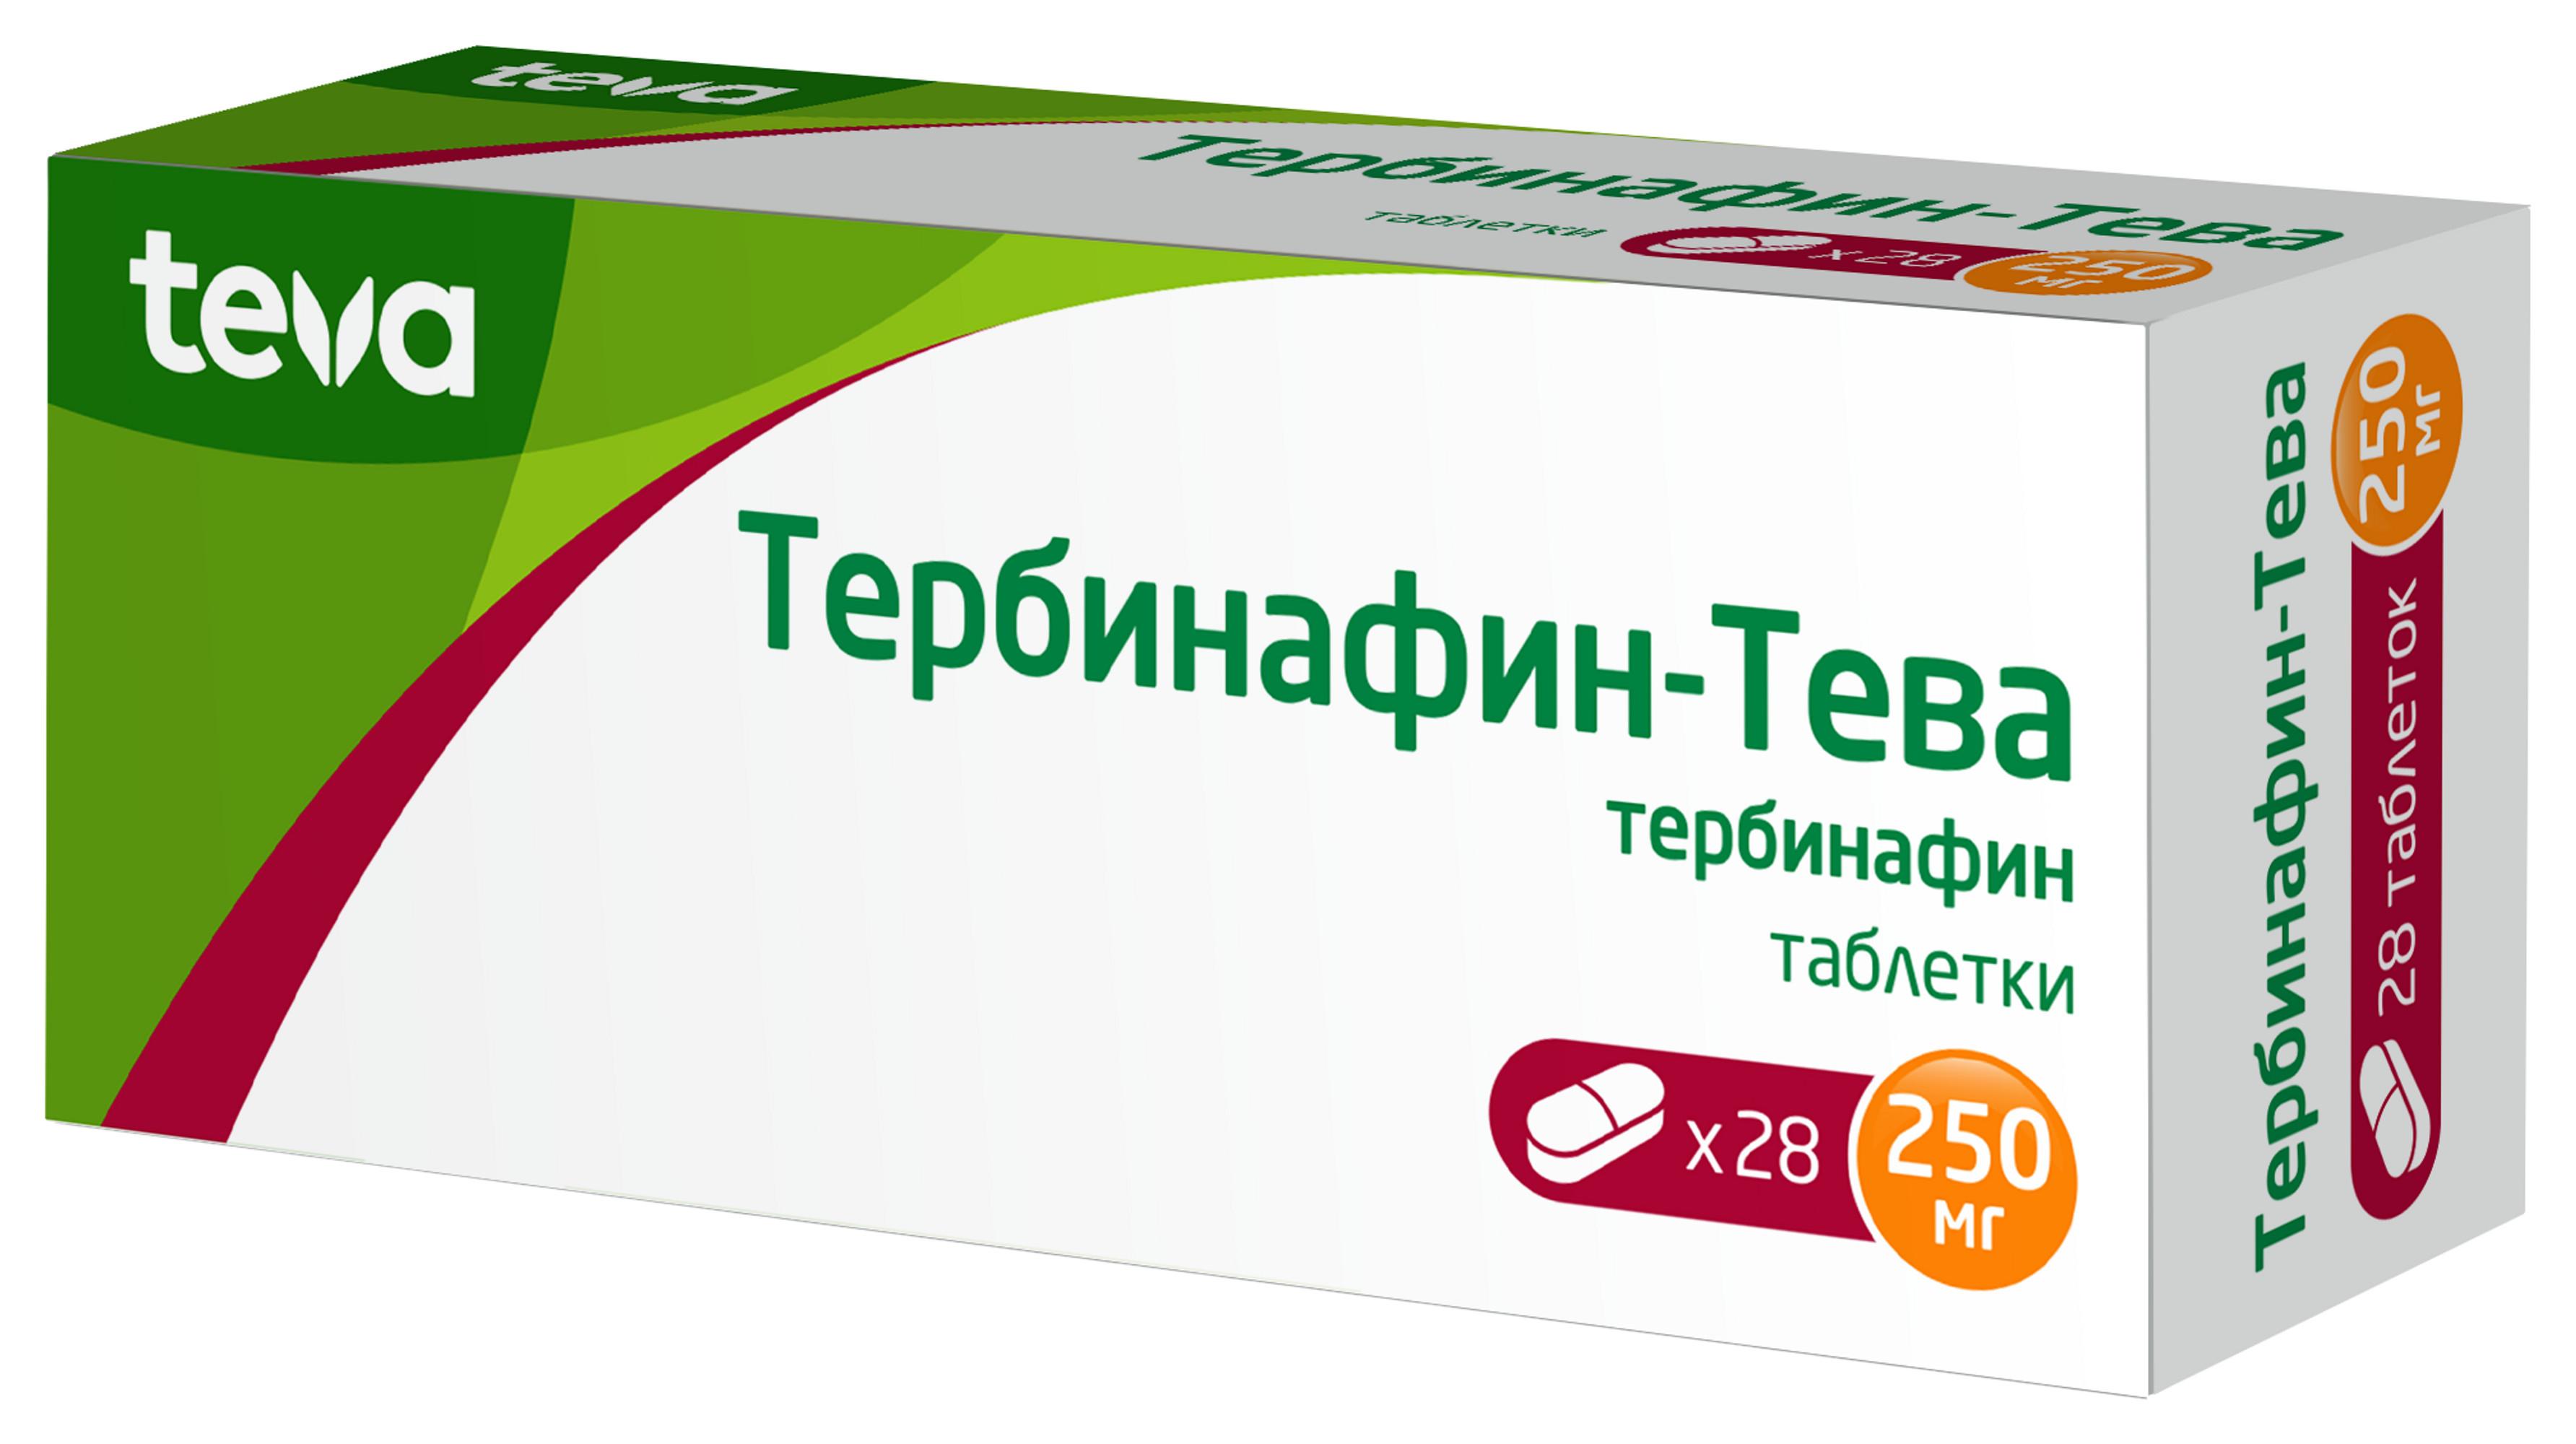 Тербинафин -Тева Таблетки 250 мг 28 шт  в Троицке, цена 909,0 руб .